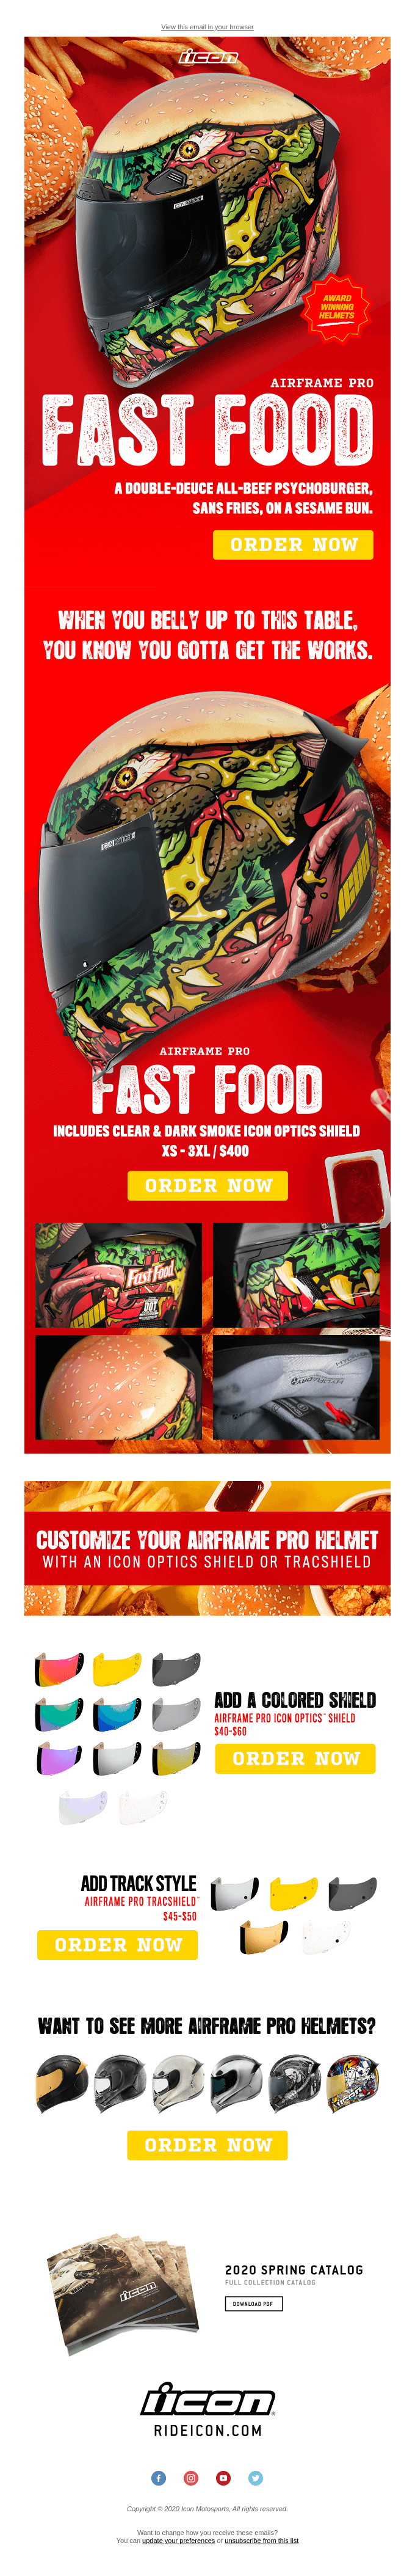 Hey Bob, Flip This! 🍔 Airframe Pro Fast Food Helmet